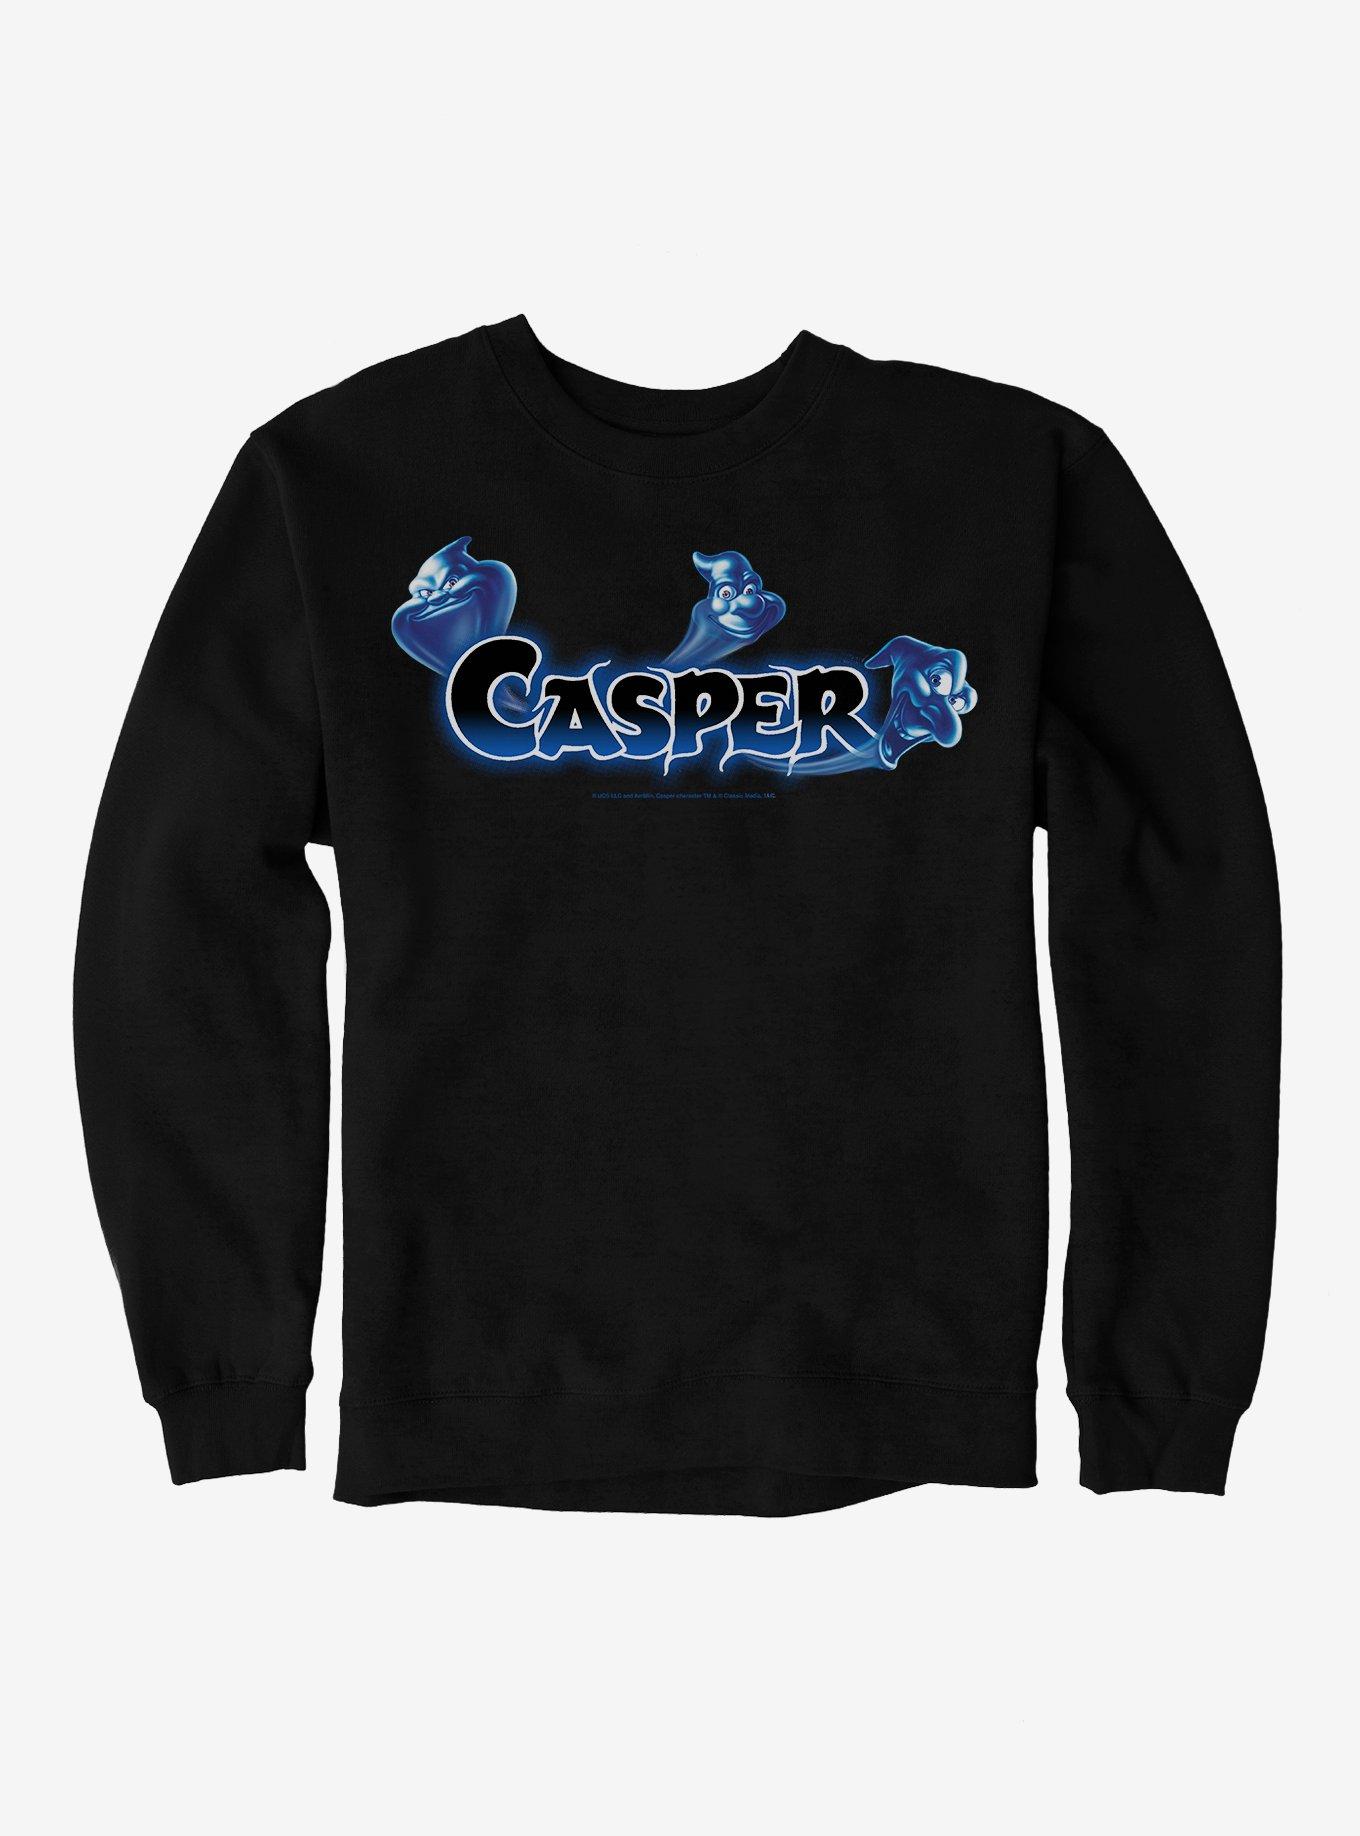 Casper Fatso, Stinky & Stretch Logo Sweatshirt, BLACK, hi-res